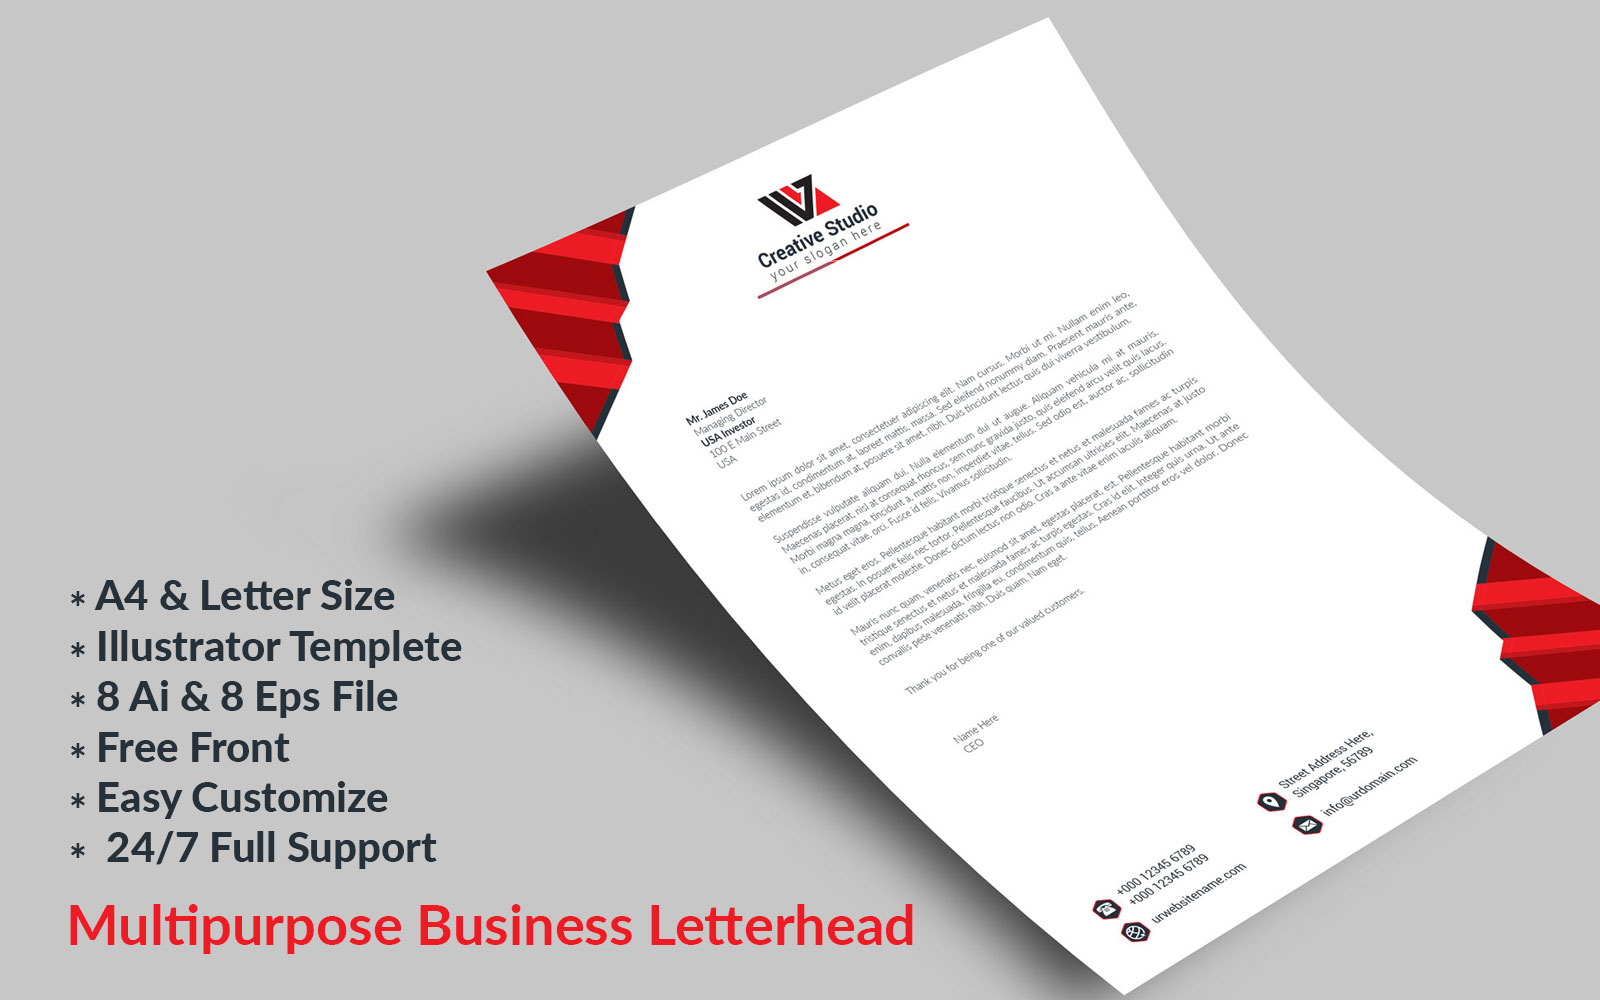 Multipurpose Business Letterhead - Corporate Identity Template